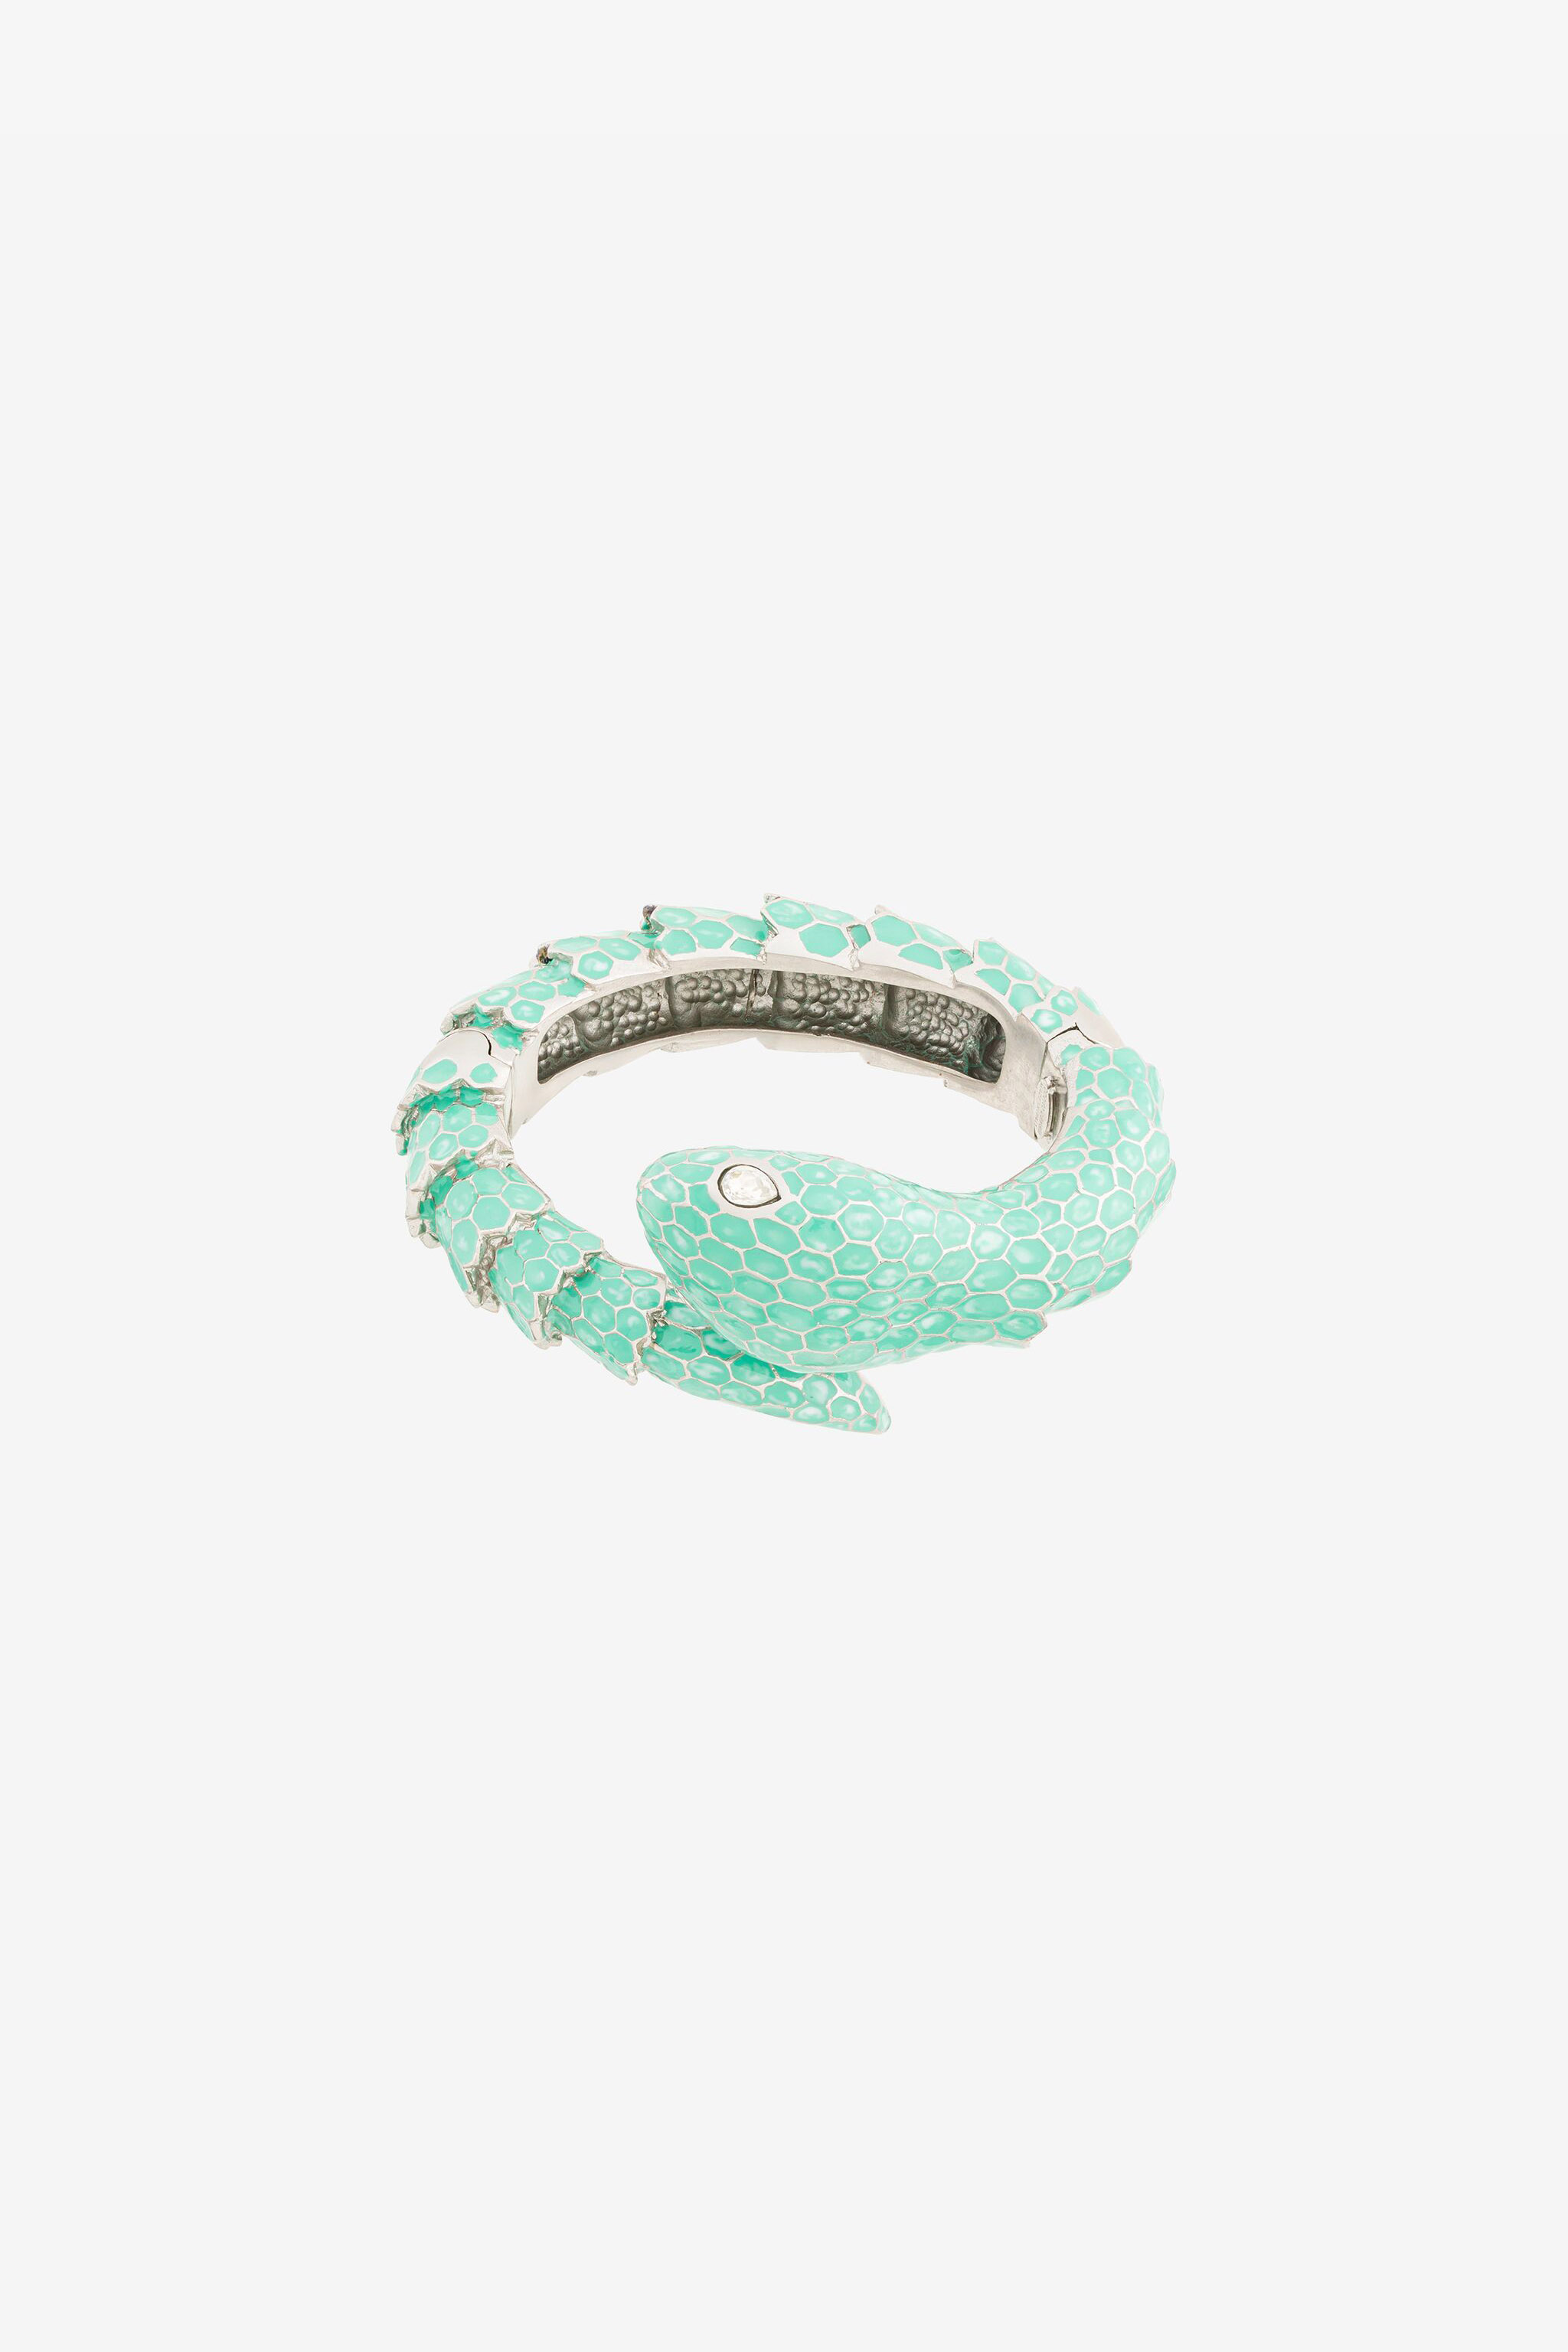 Roberto Cavalli Embellished Snake Bracelet in Metallic